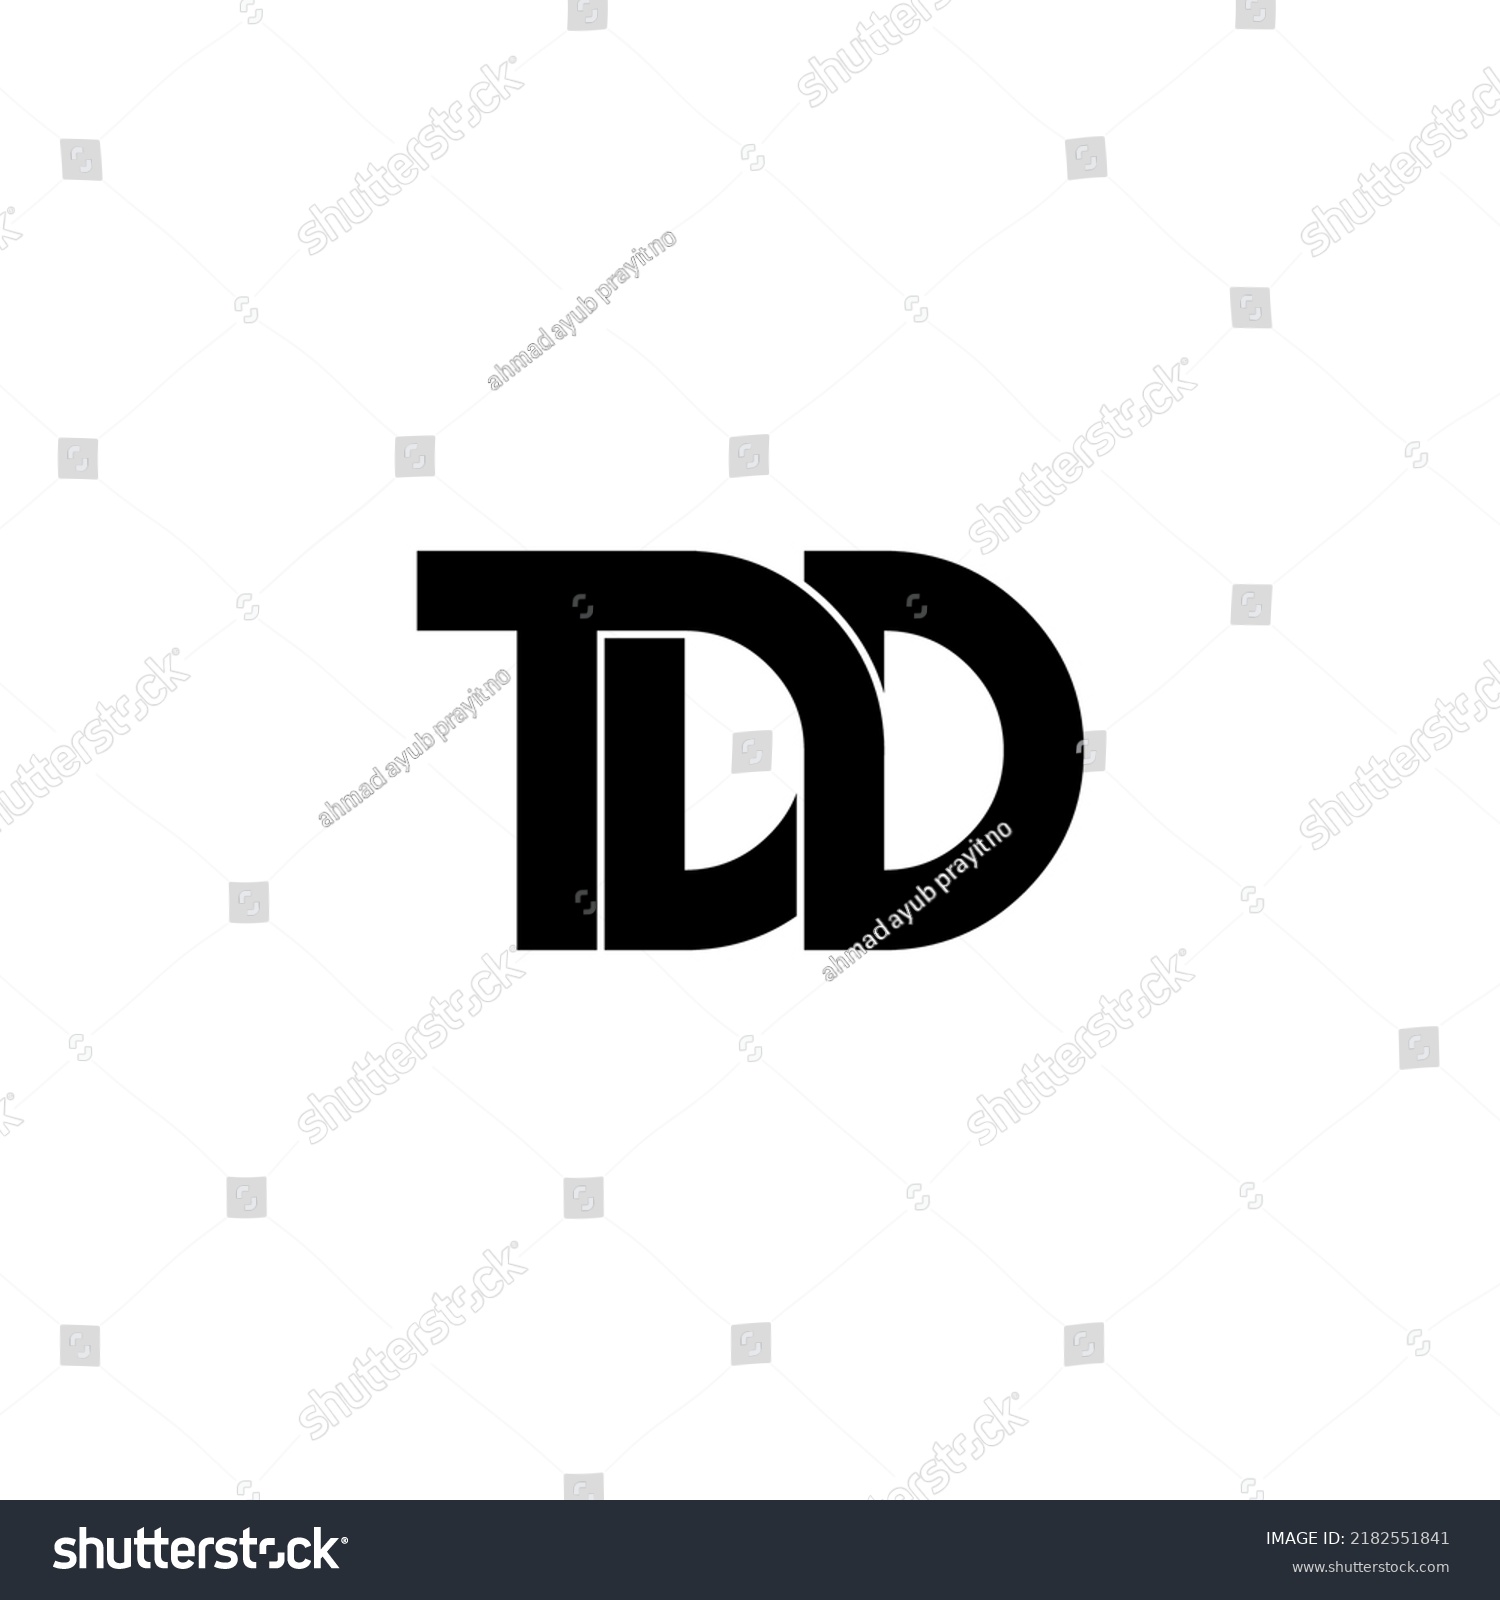 Tdd Initial Letter Monogram Logo Design Stock Vector (Royalty Free ...